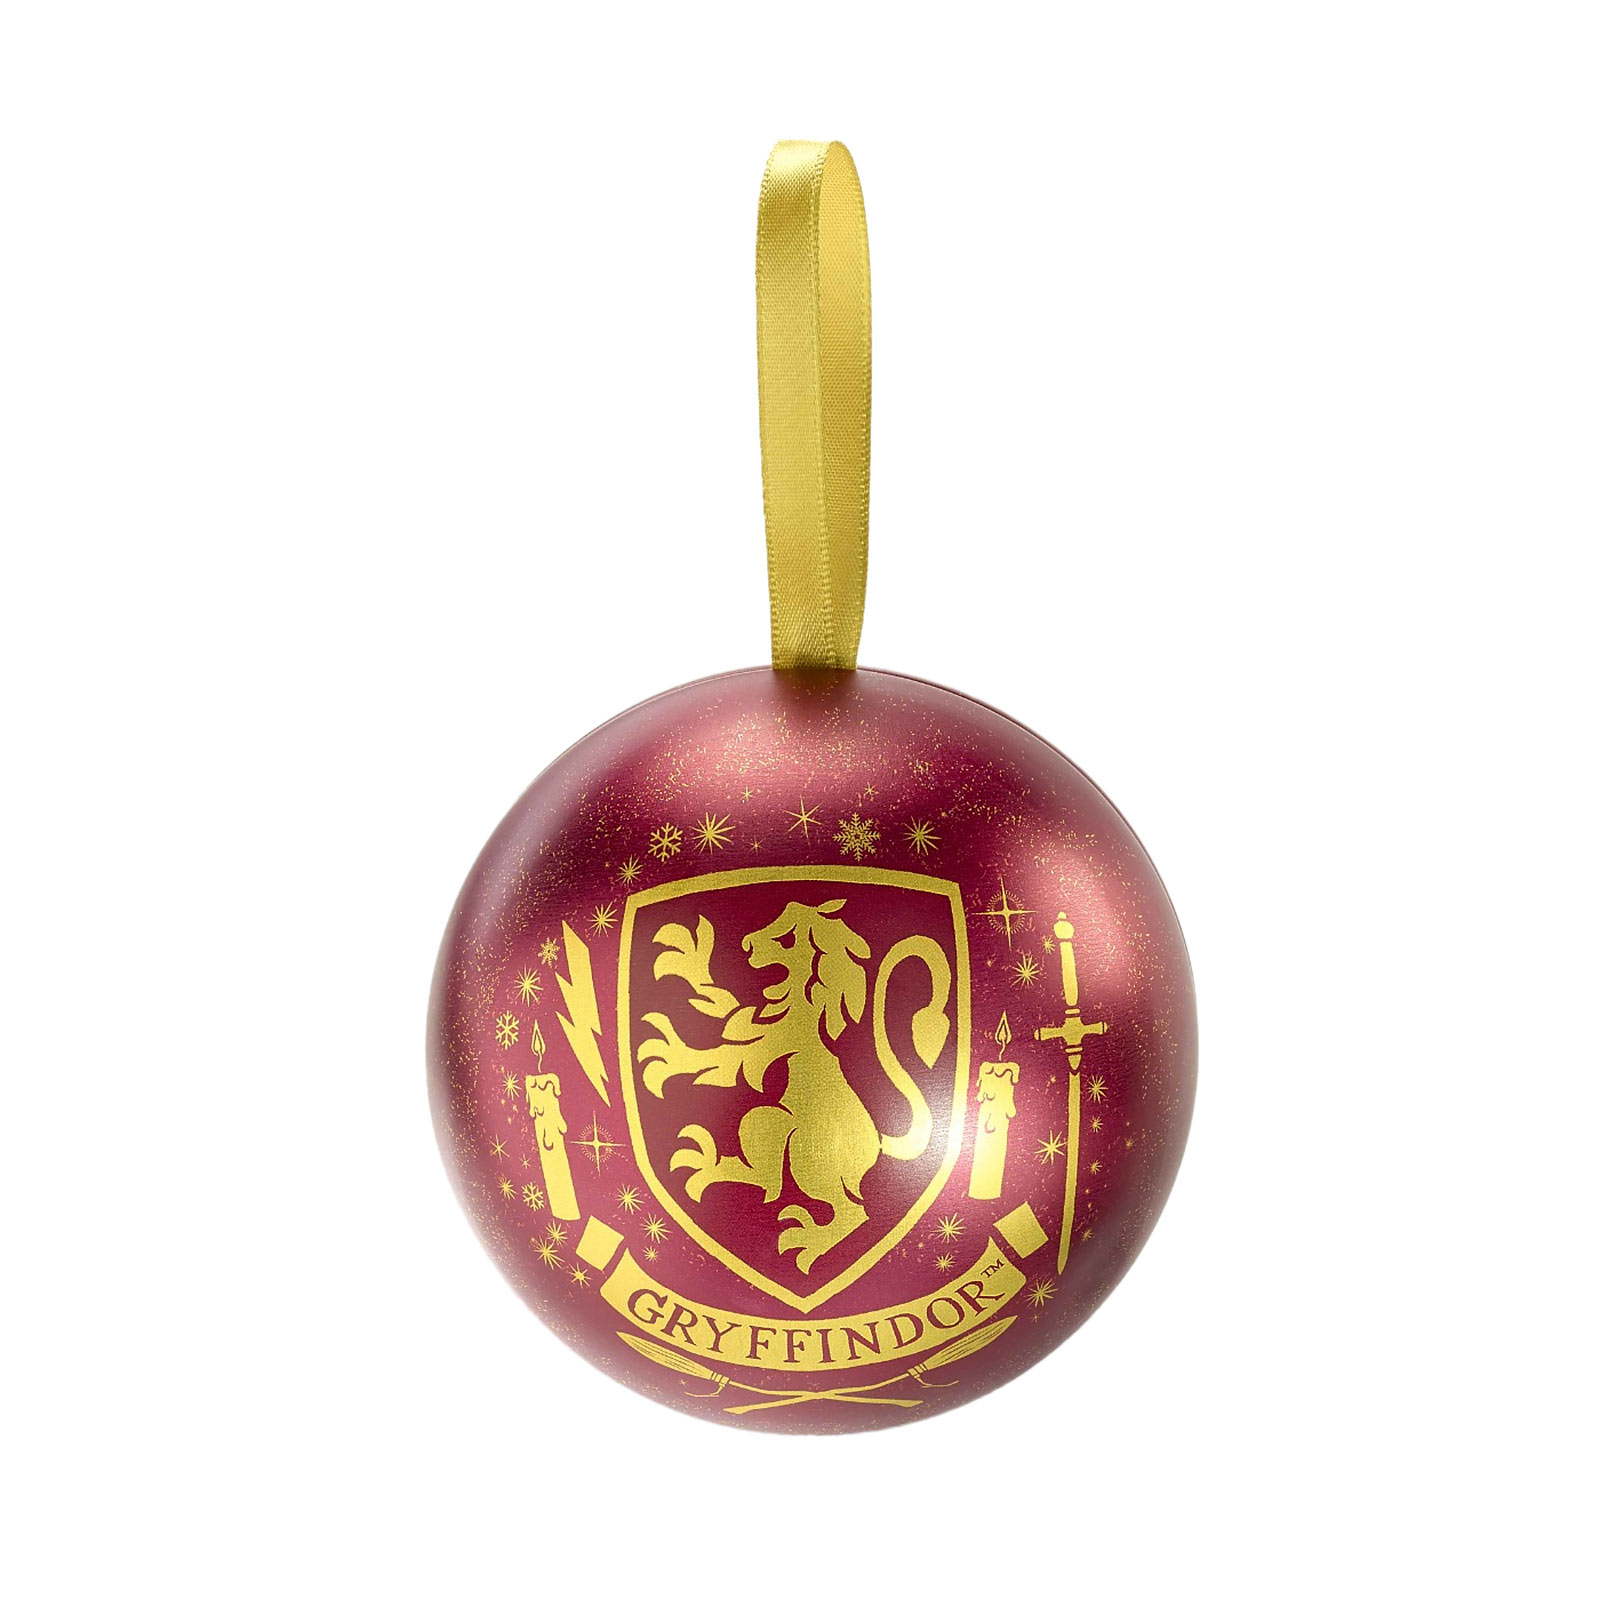 Harry Potter - Boule de Noël avec collier de blason Gryffondor